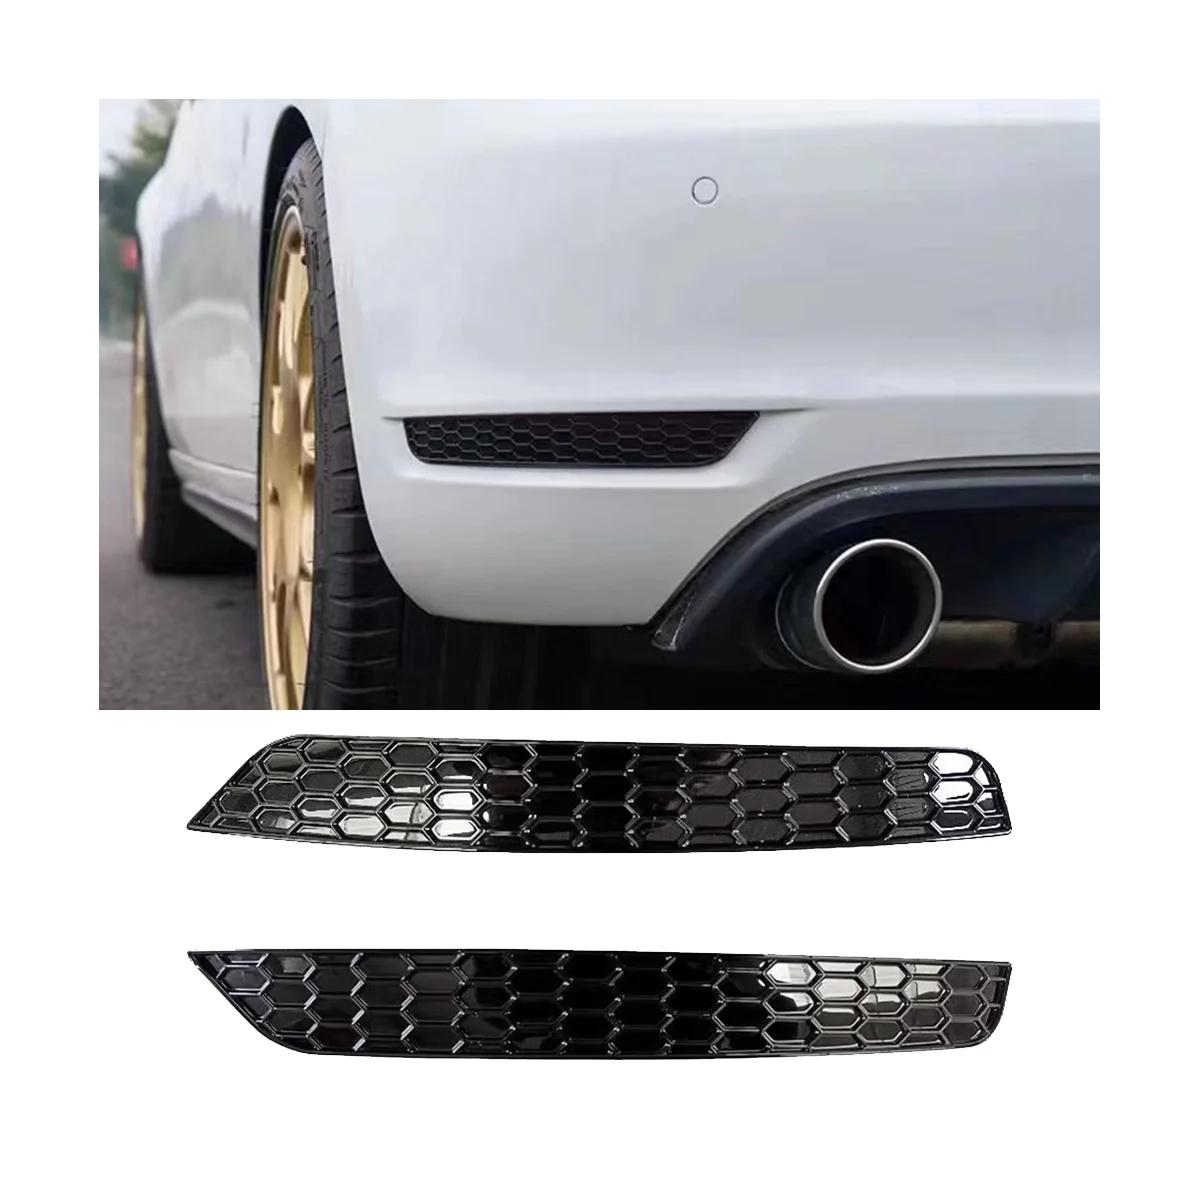 

1Pair Honeycomb Tail Rear Fog Light Cover Trim Styling for Golf 6 GTI Rear Bar Bumper Reflector Strips Sticker Glossy